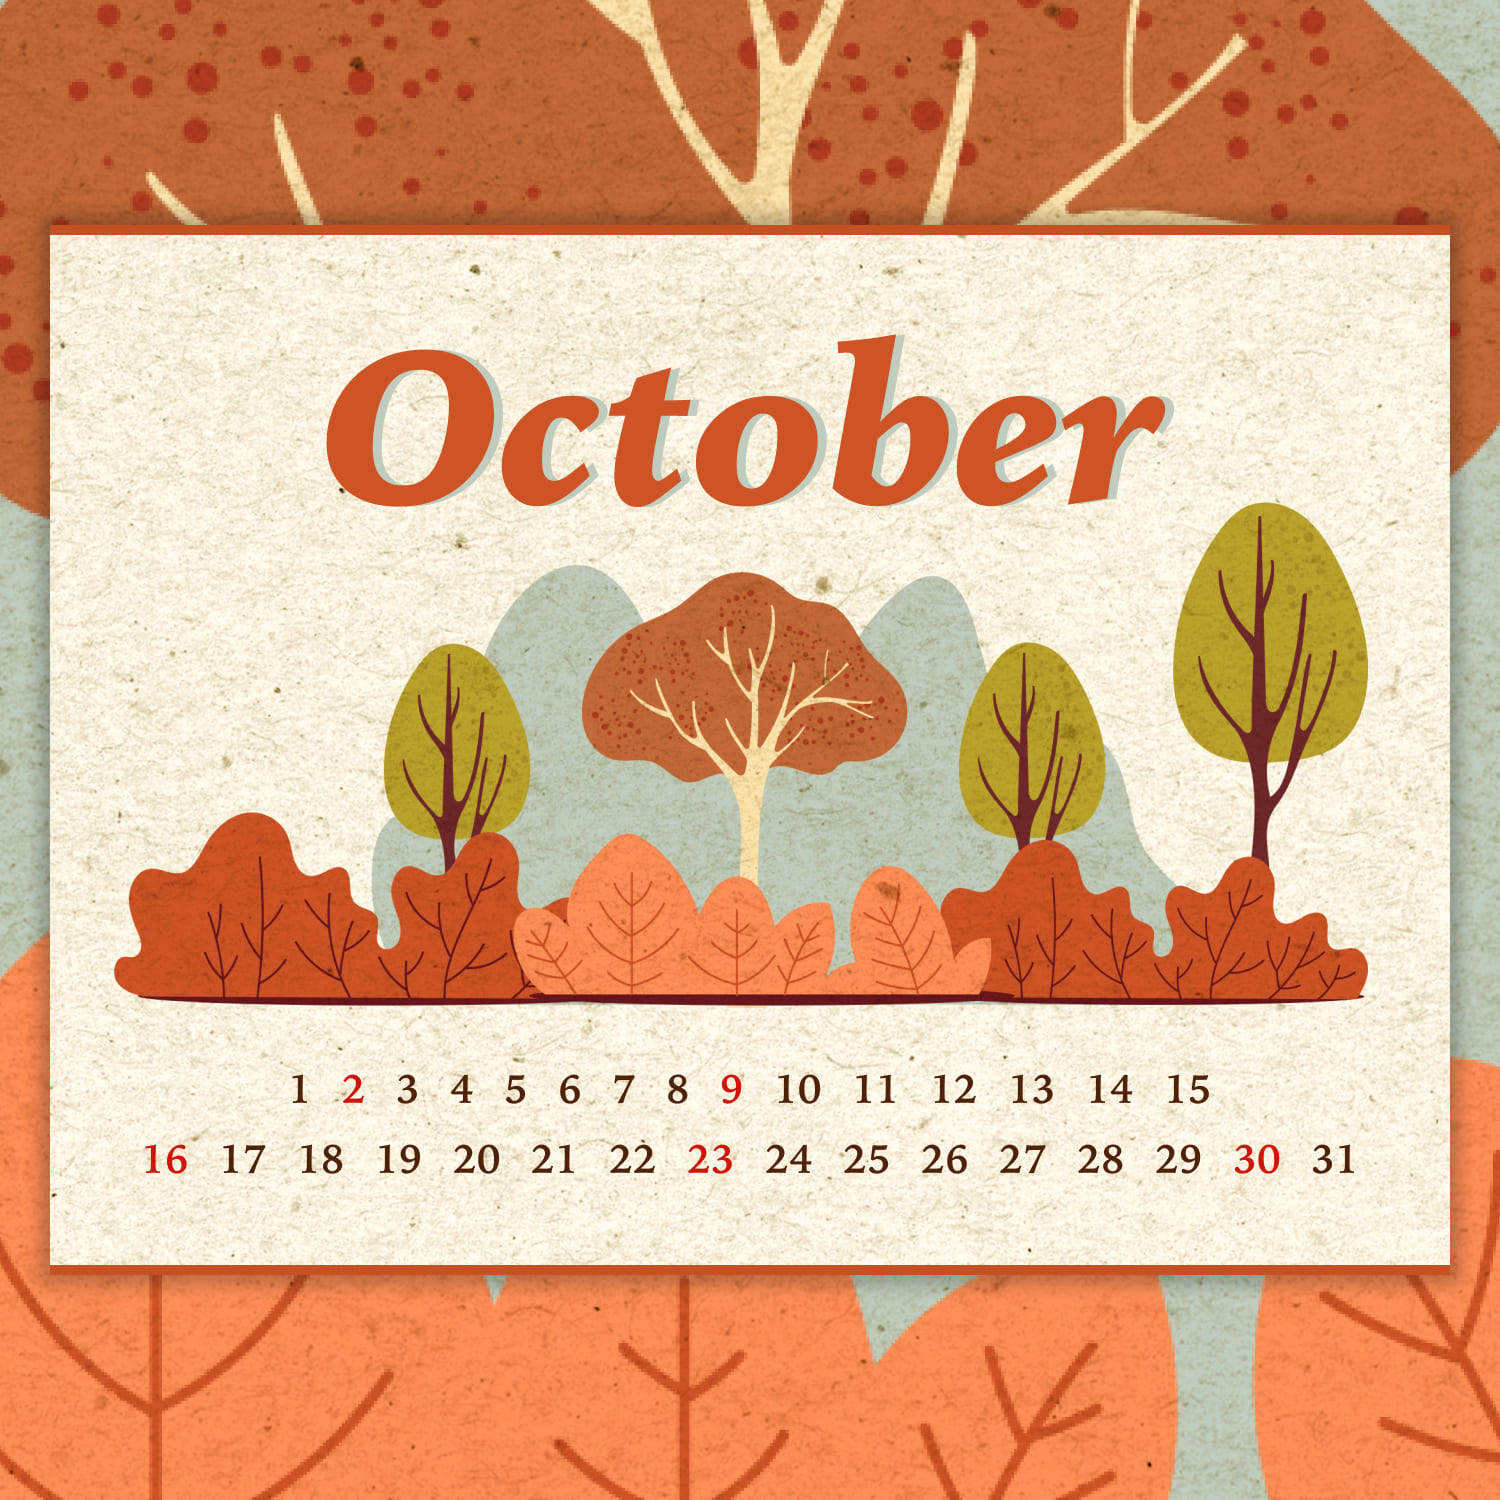 Free Editable Calendar October cover image.